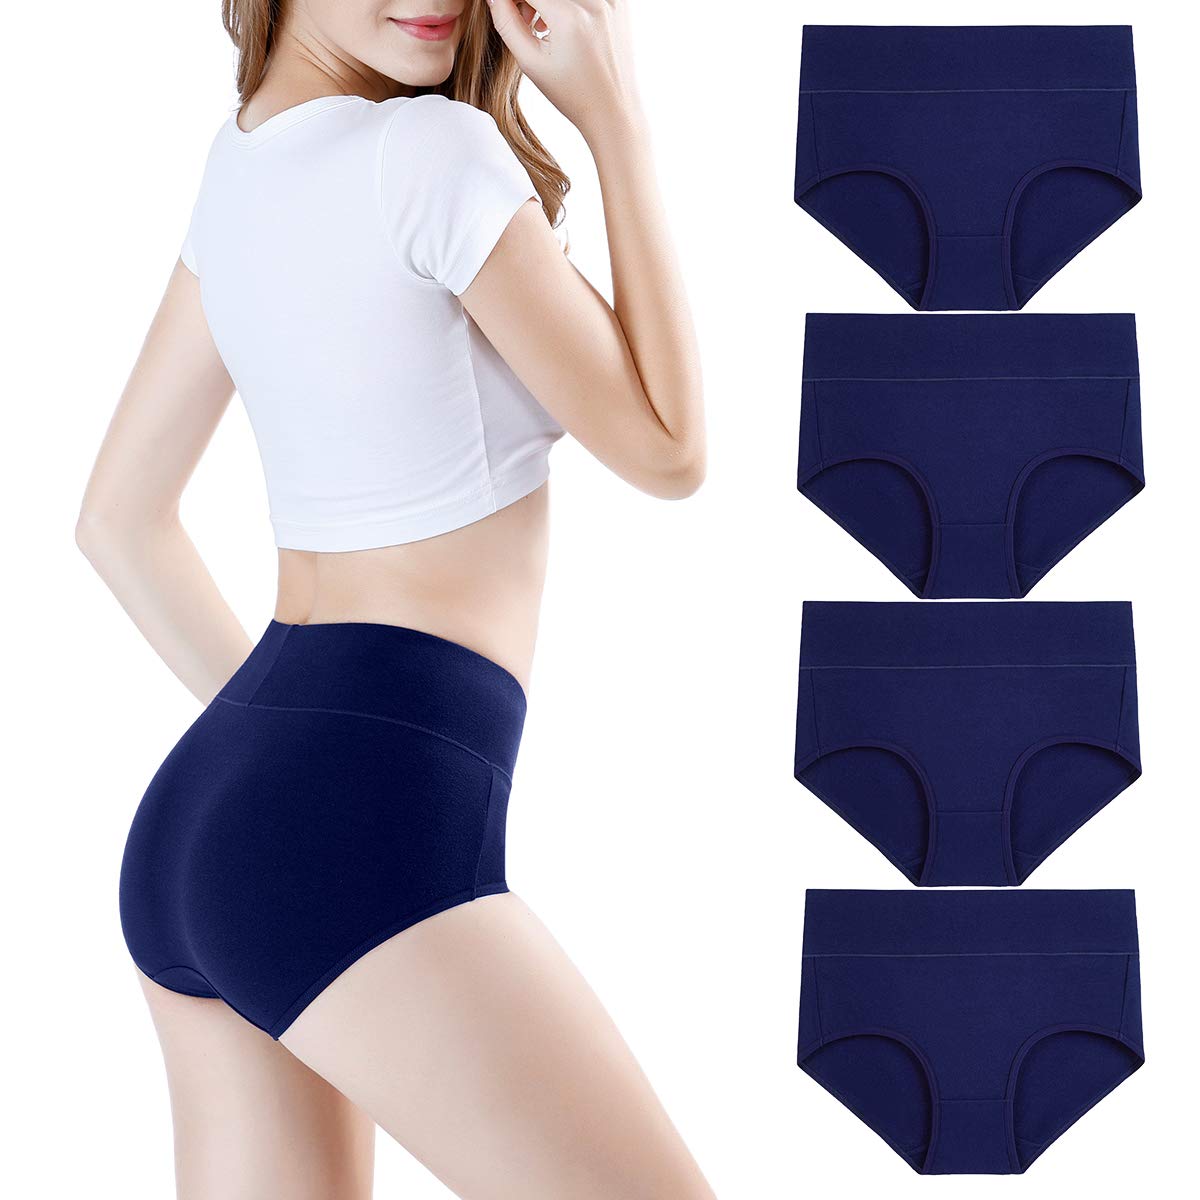 Wirarpa + Women’s Bamboo Underwear Modal Microfiber Briefs